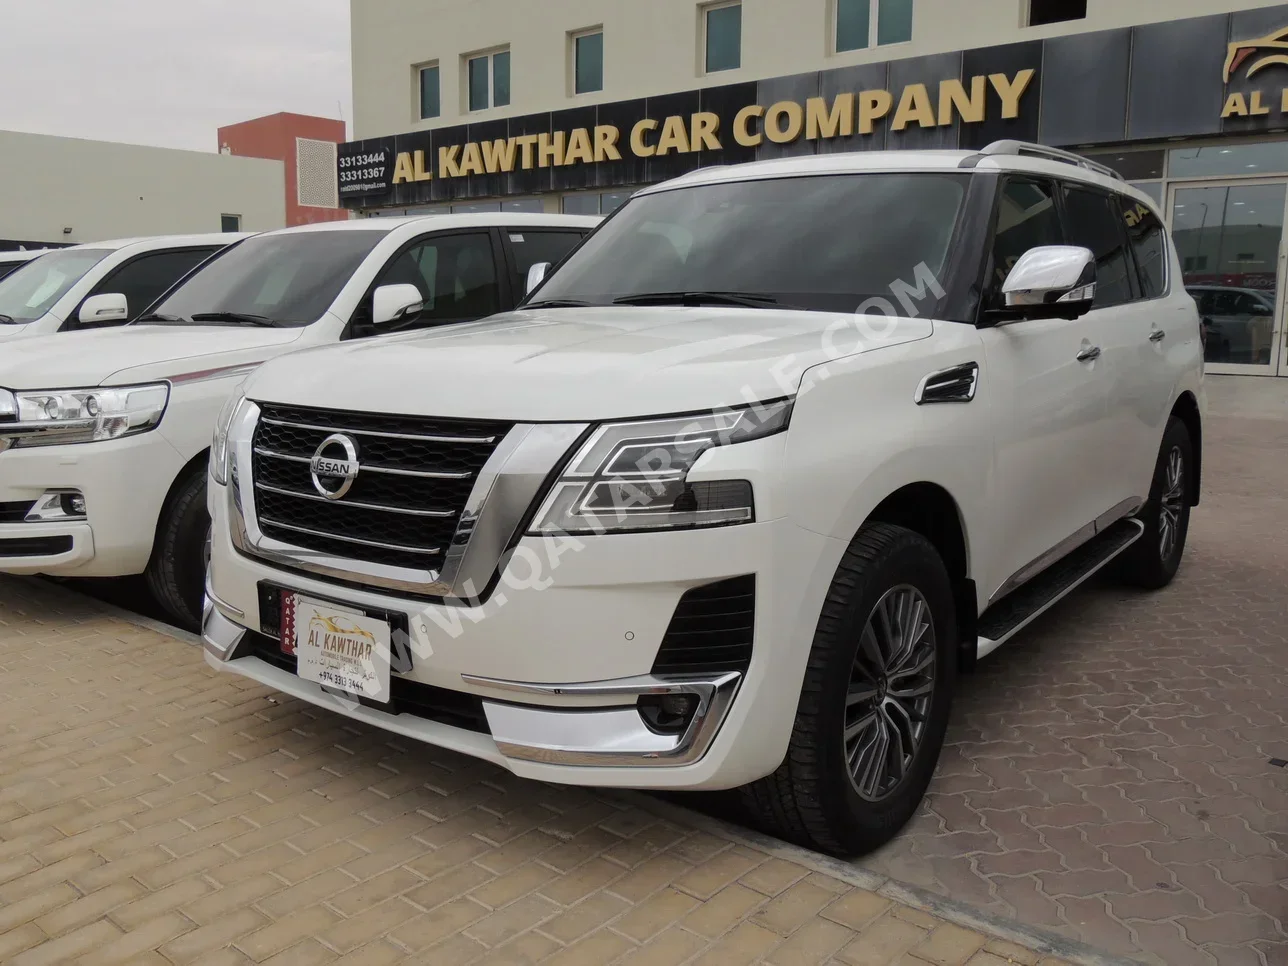 Nissan  Patrol  Platinum  2021  Automatic  39,000 Km  6 Cylinder  Four Wheel Drive (4WD)  SUV  White  With Warranty